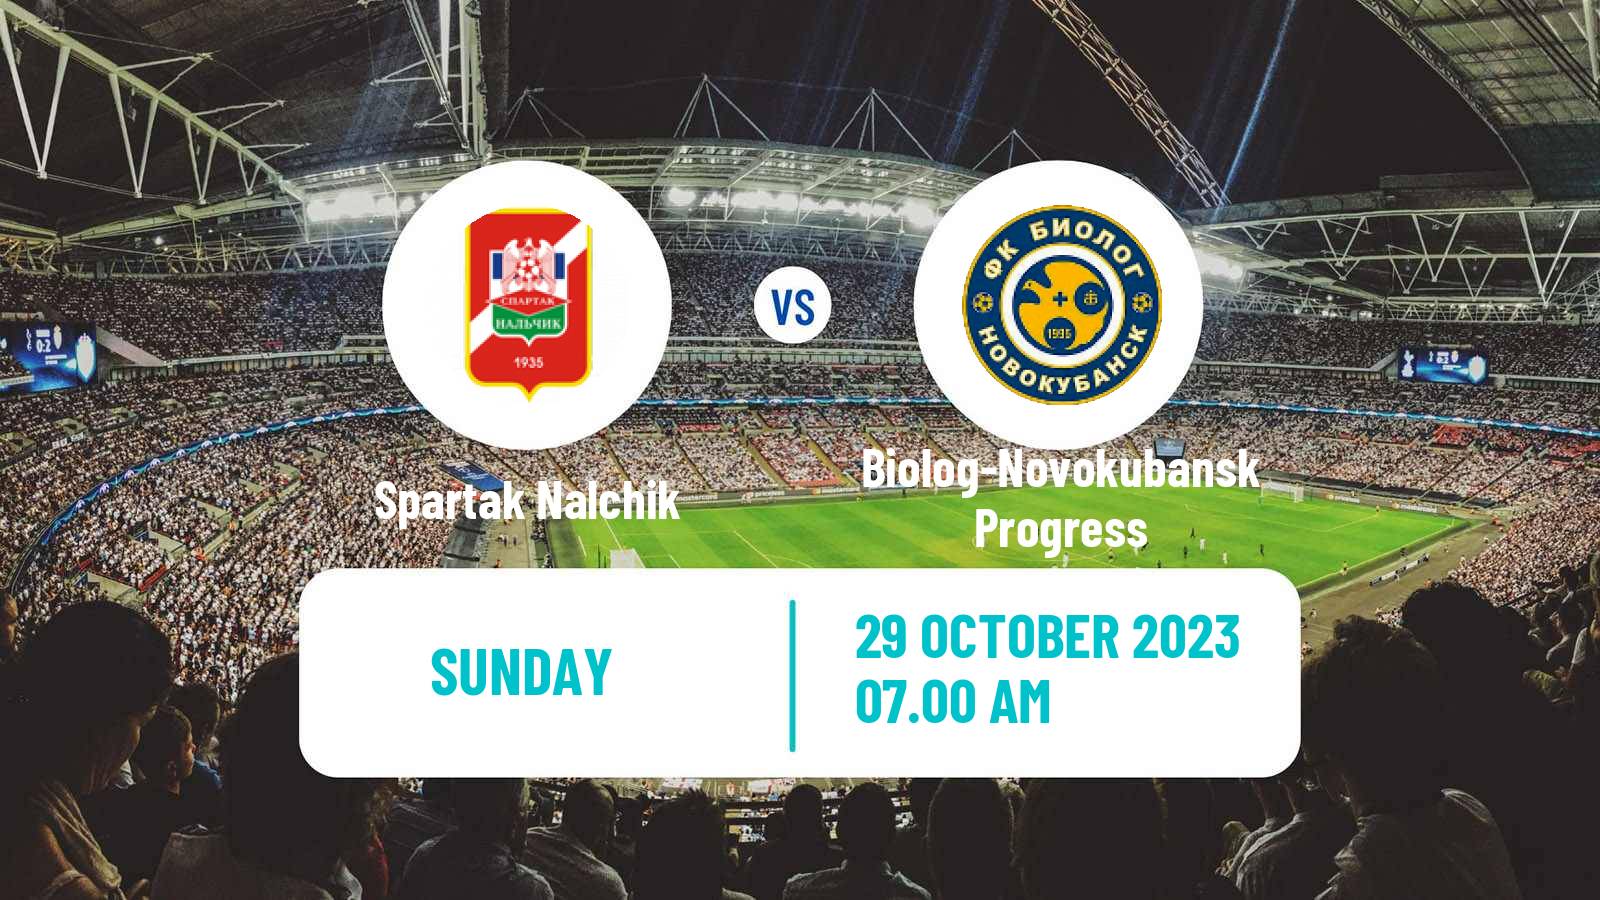 Soccer FNL 2 Division B Group 1 Spartak Nalchik - Biolog-Novokubansk Progress